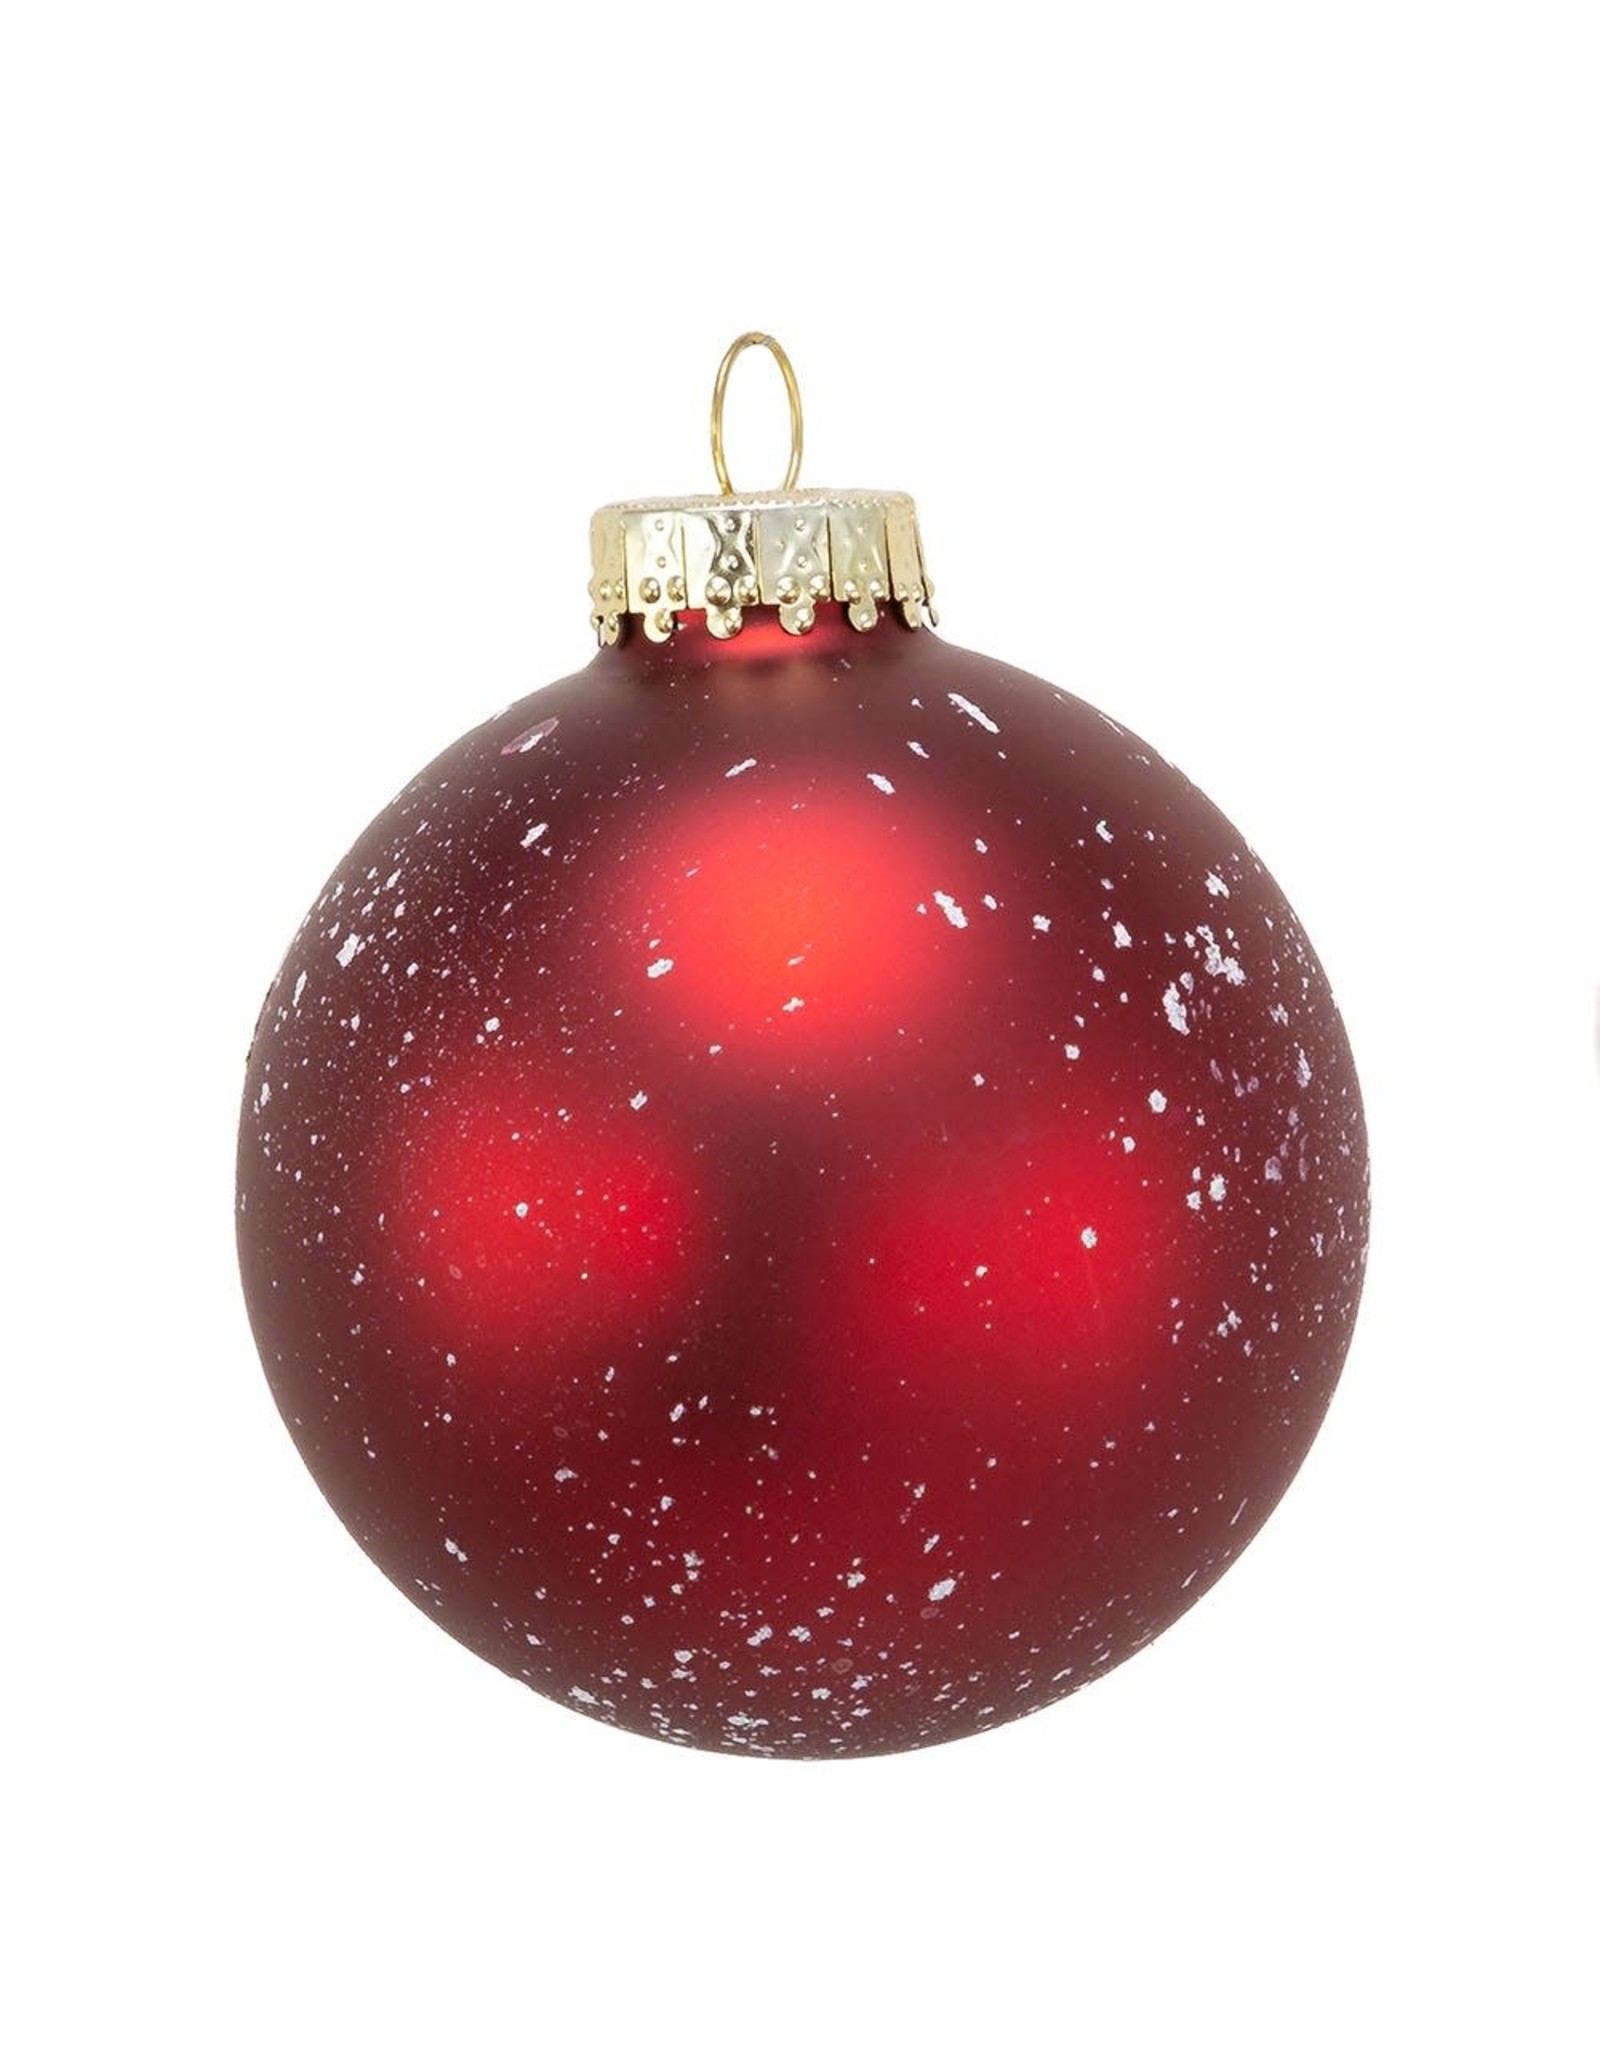 Kurt Adler Red Snowy Pinecone Branch Design Ball Ornaments Set of 6